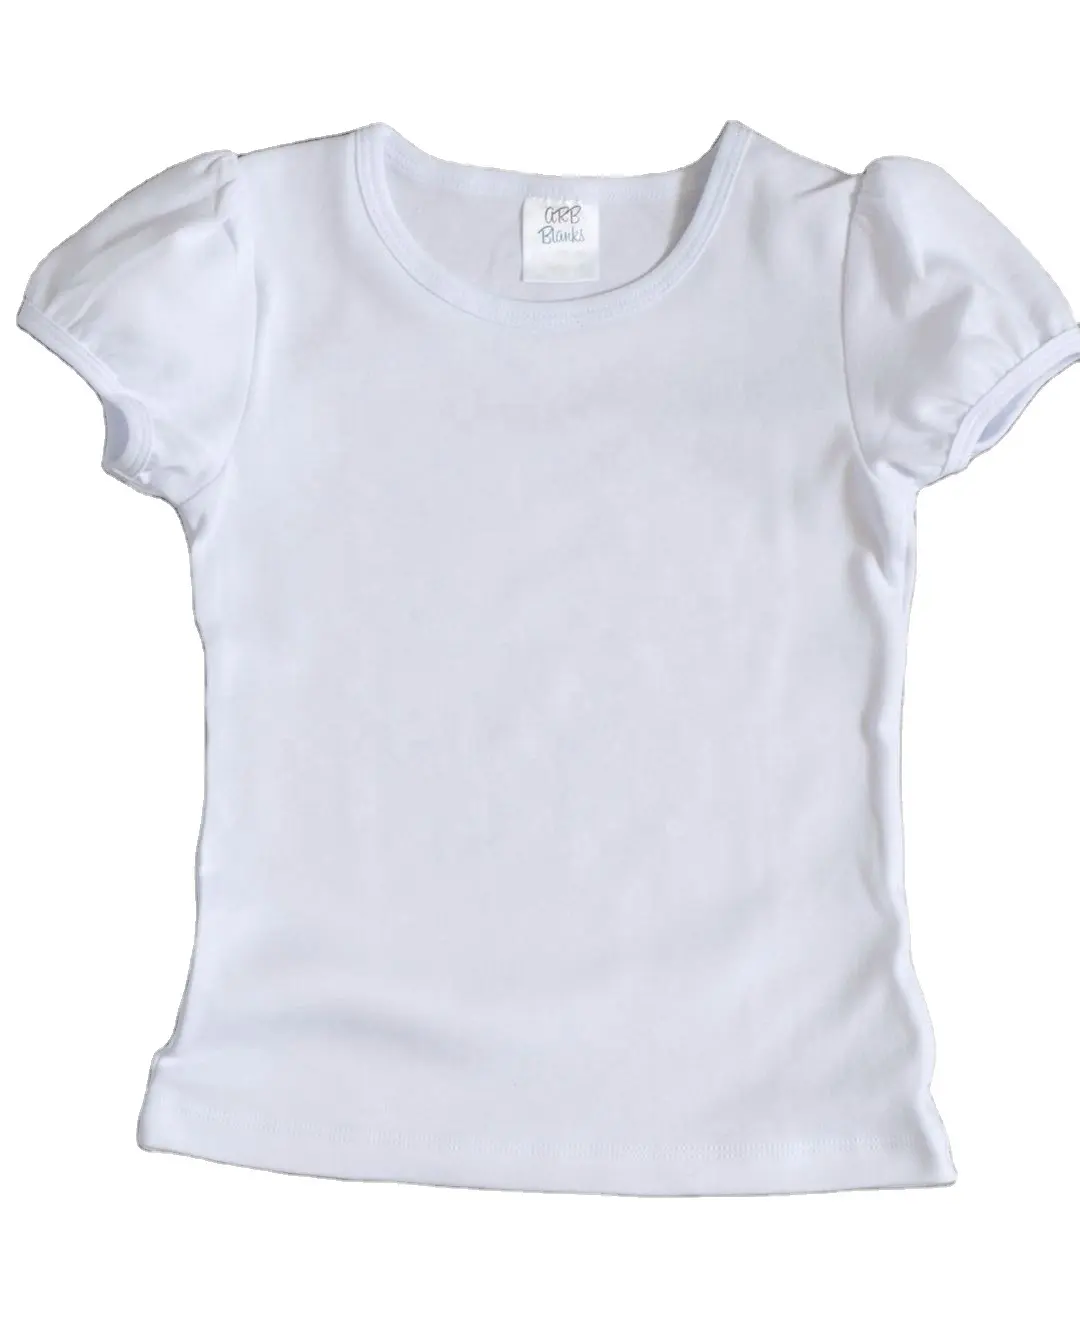 Baby kleidung, Baby Girls Puff Short Sleeve Kids T-Shirt Ruffle, großhandel baby kurzarm top